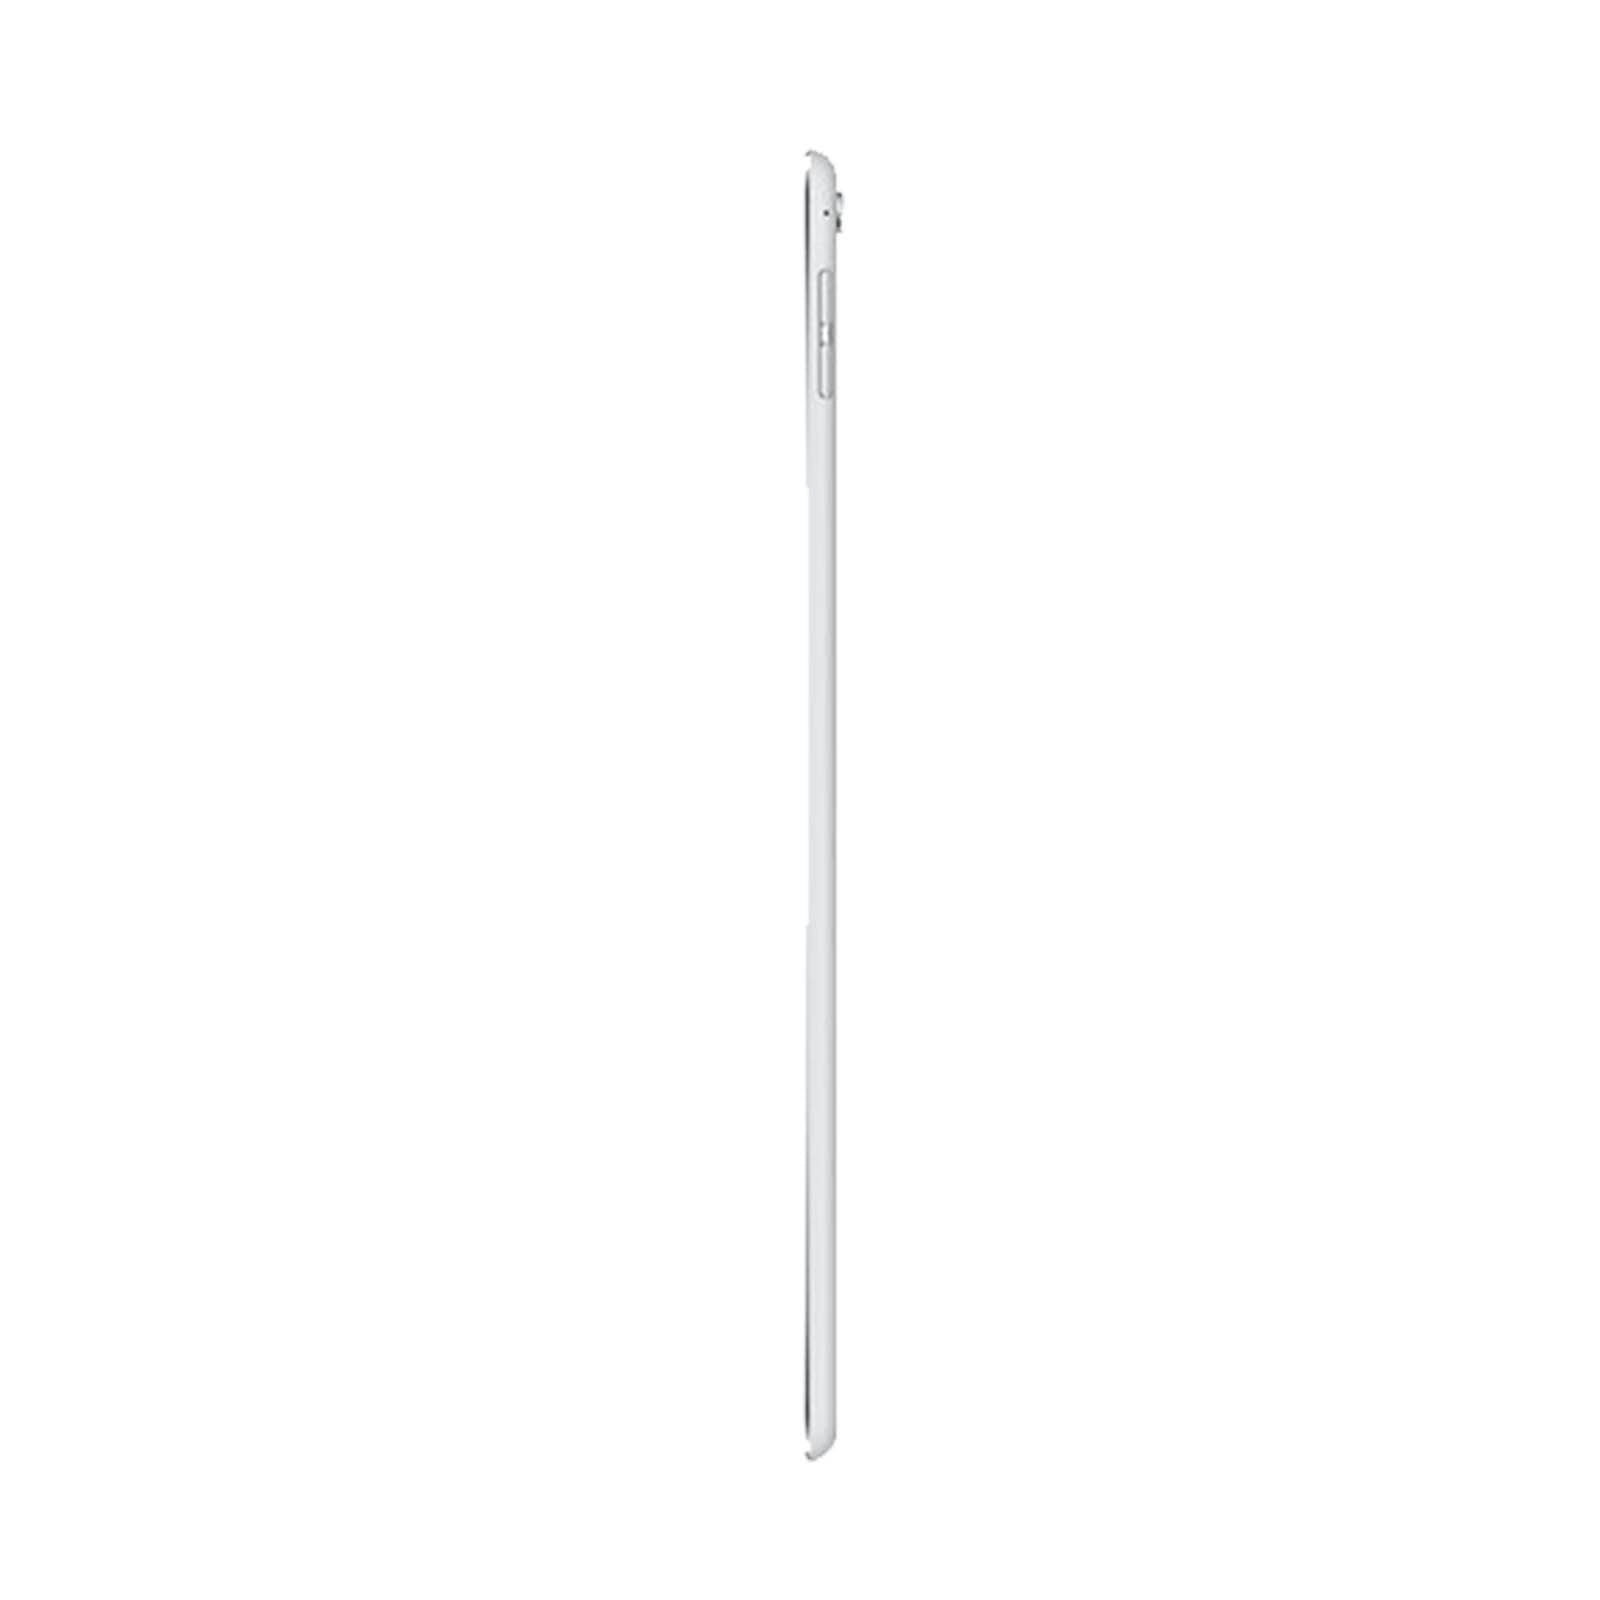 iPad Pro 9.7 Inch 128GB Silver Fair - WiFi